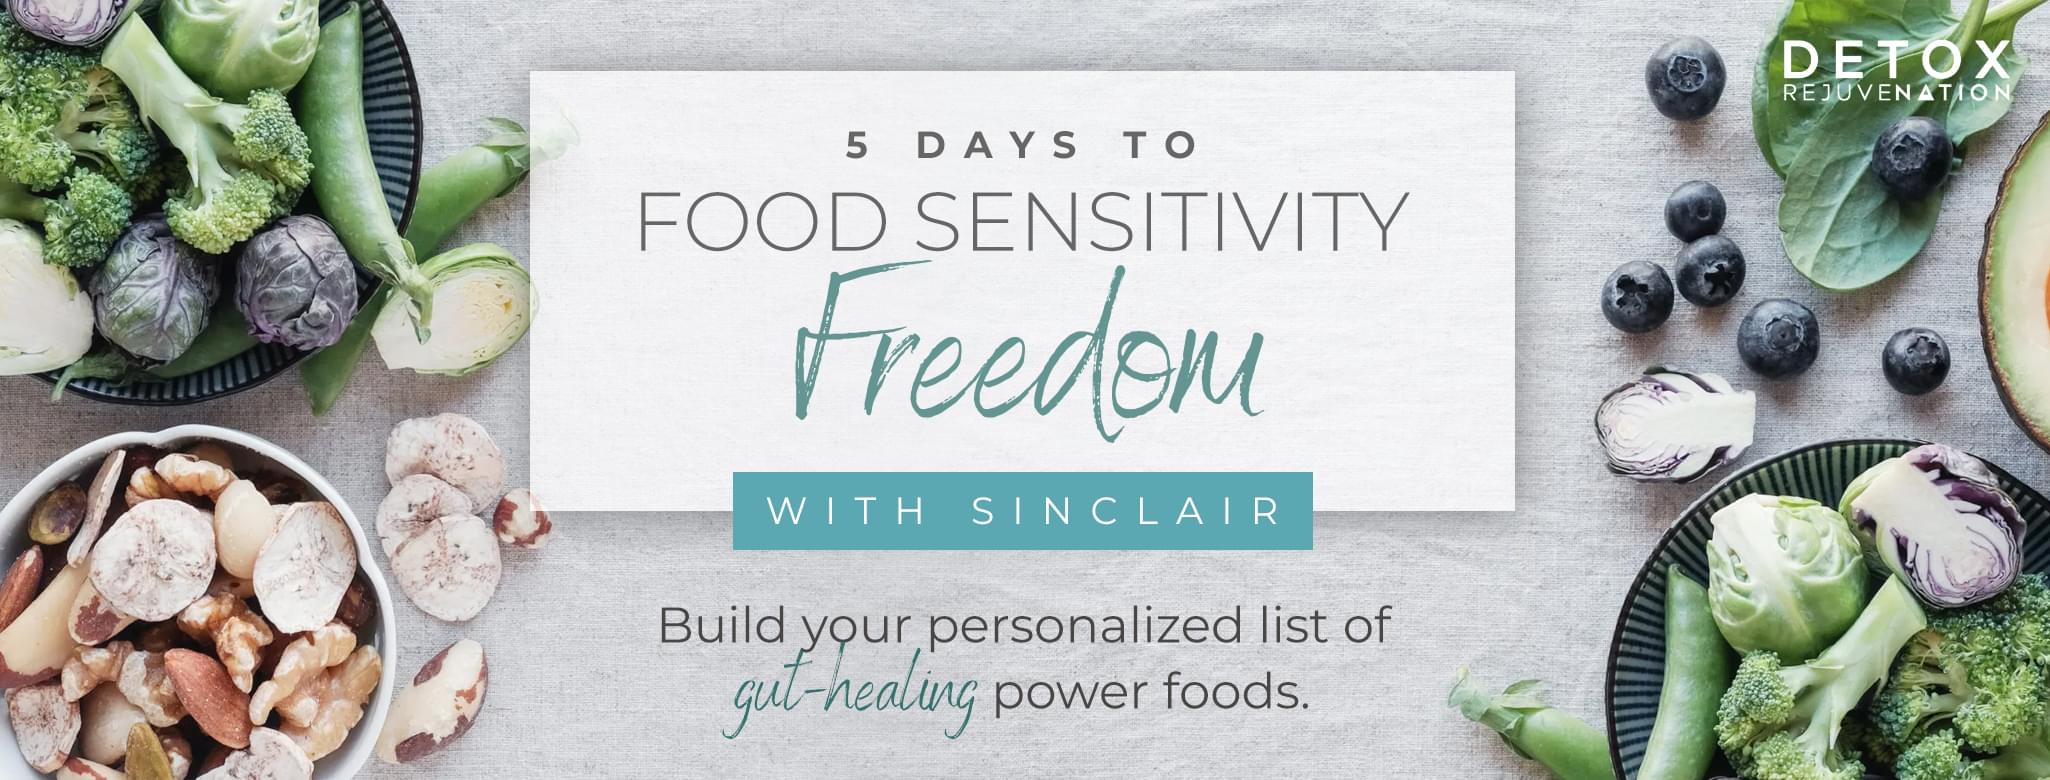 5 Days To Food Sensitivity Challenge Waitlist